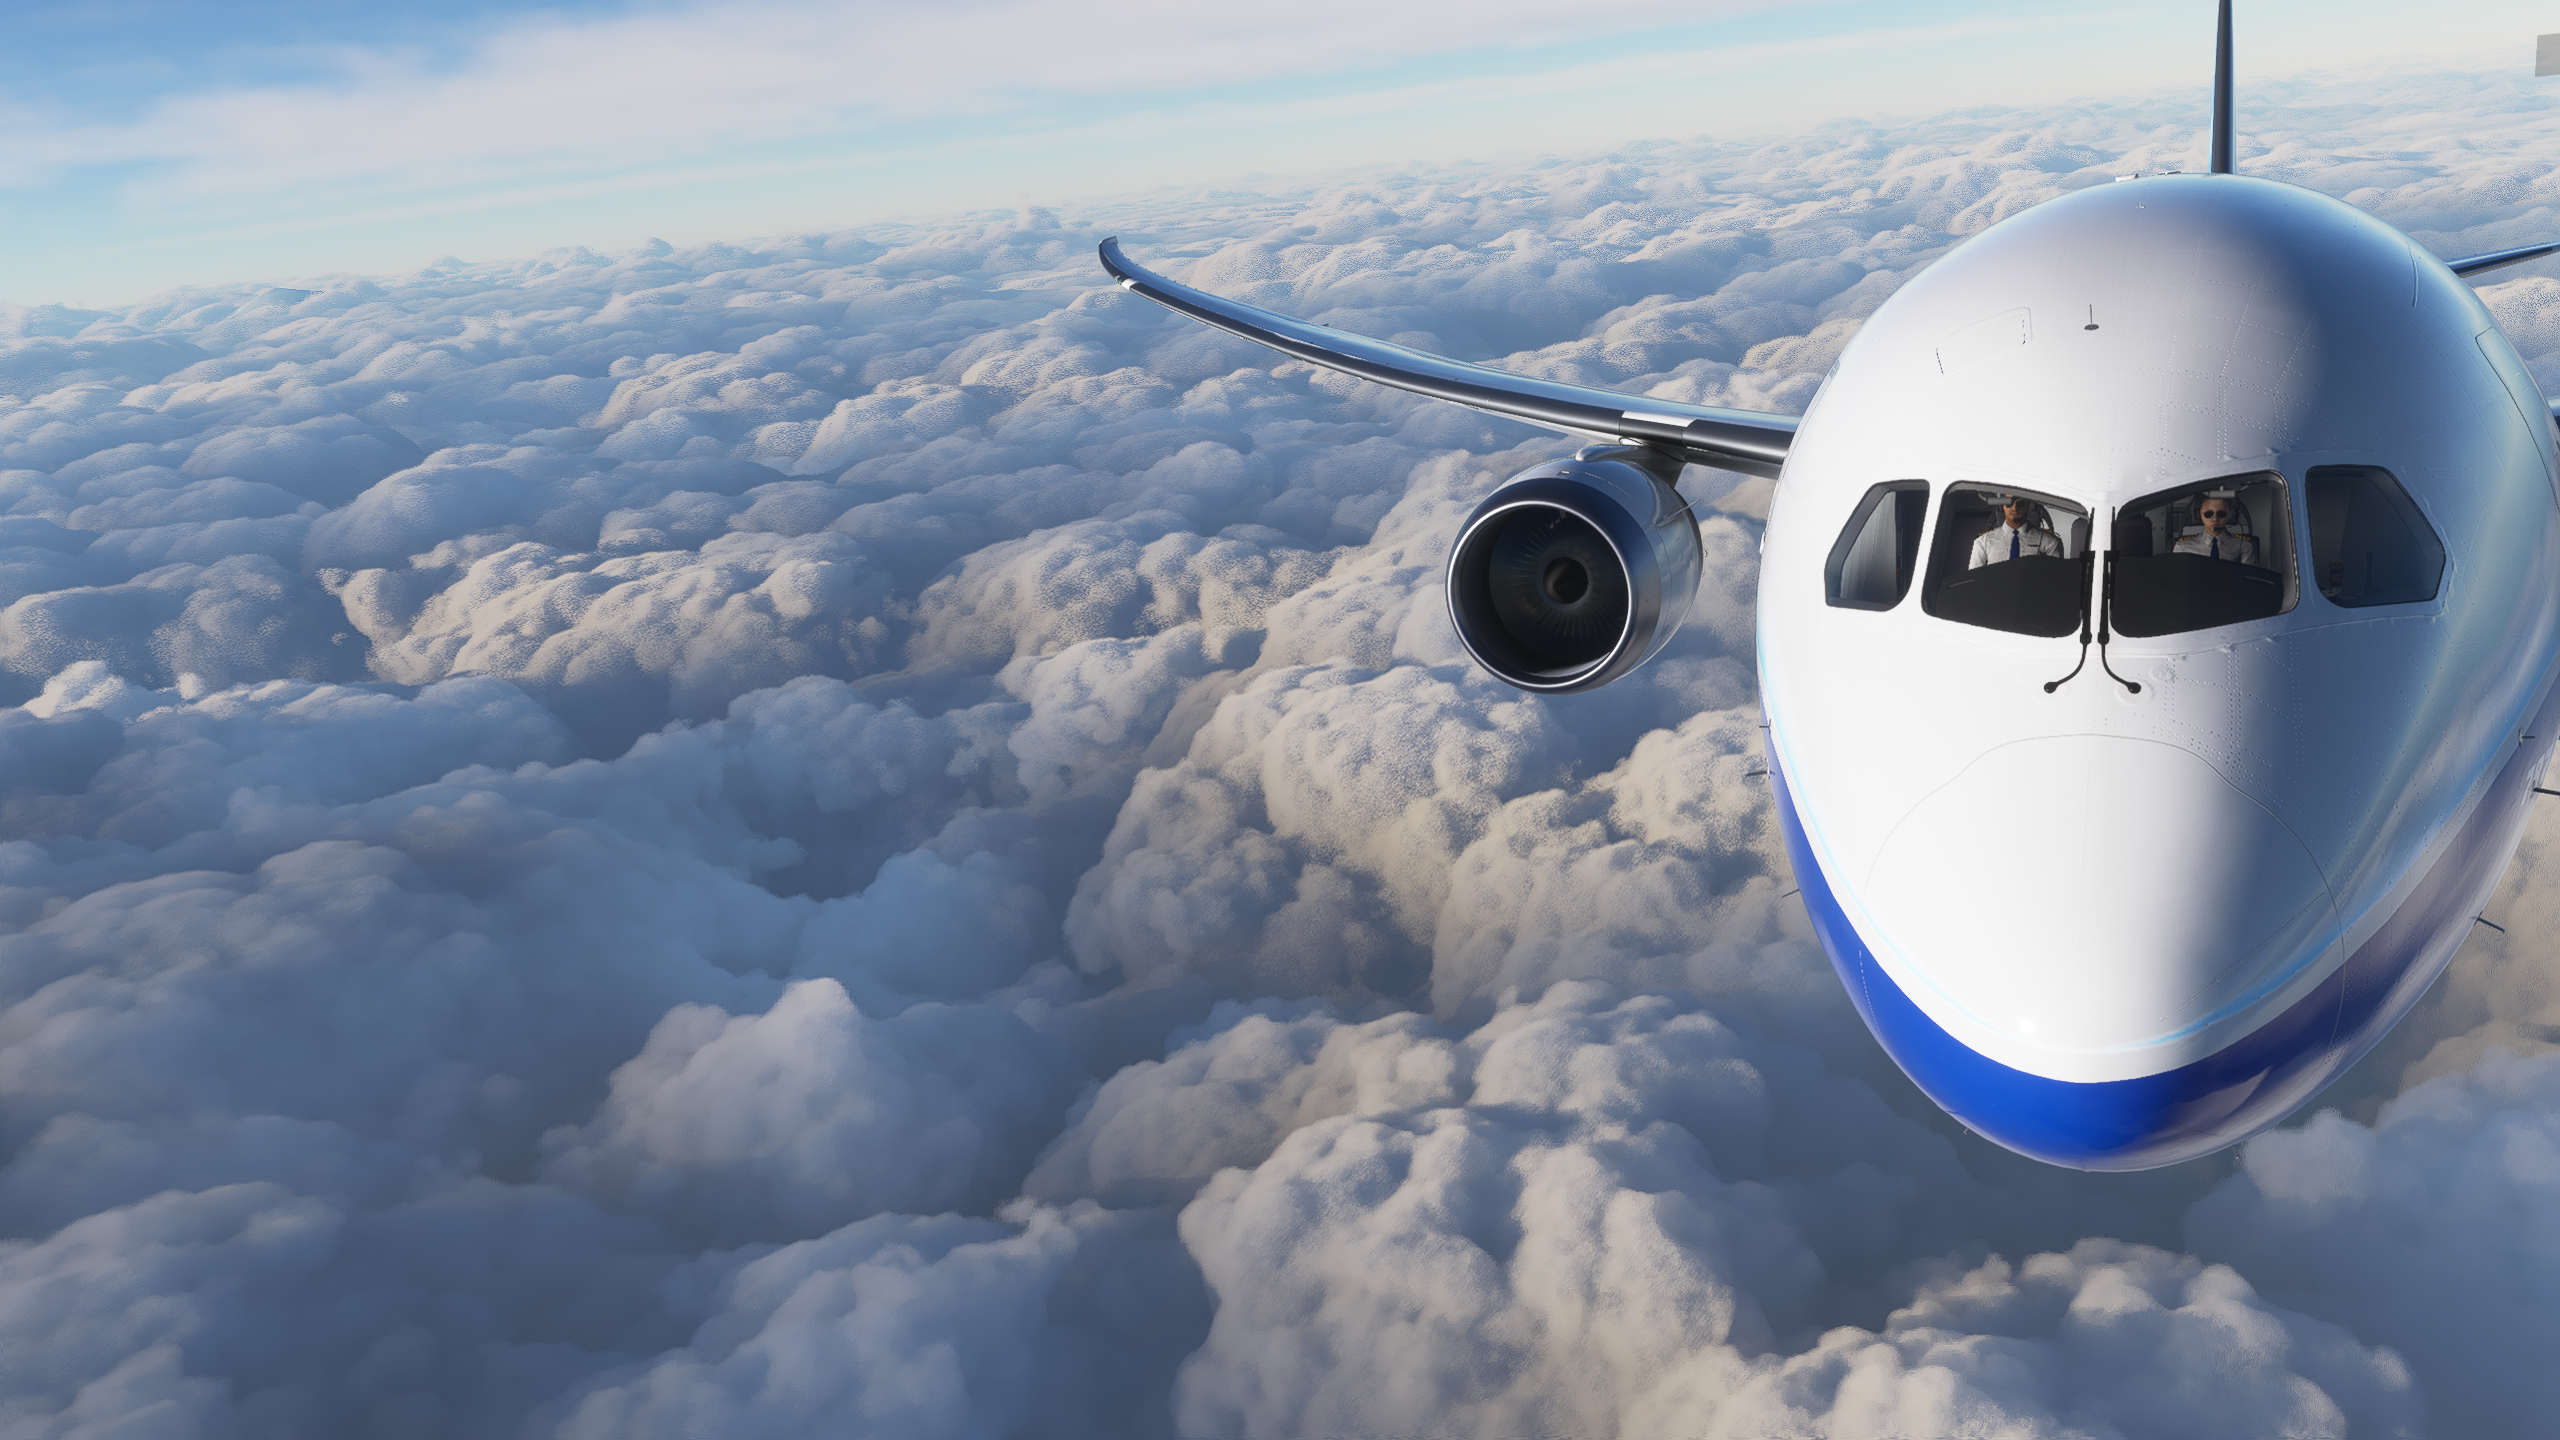 Flight Simulator Boeing 767 Clouds Sky 2560x1440